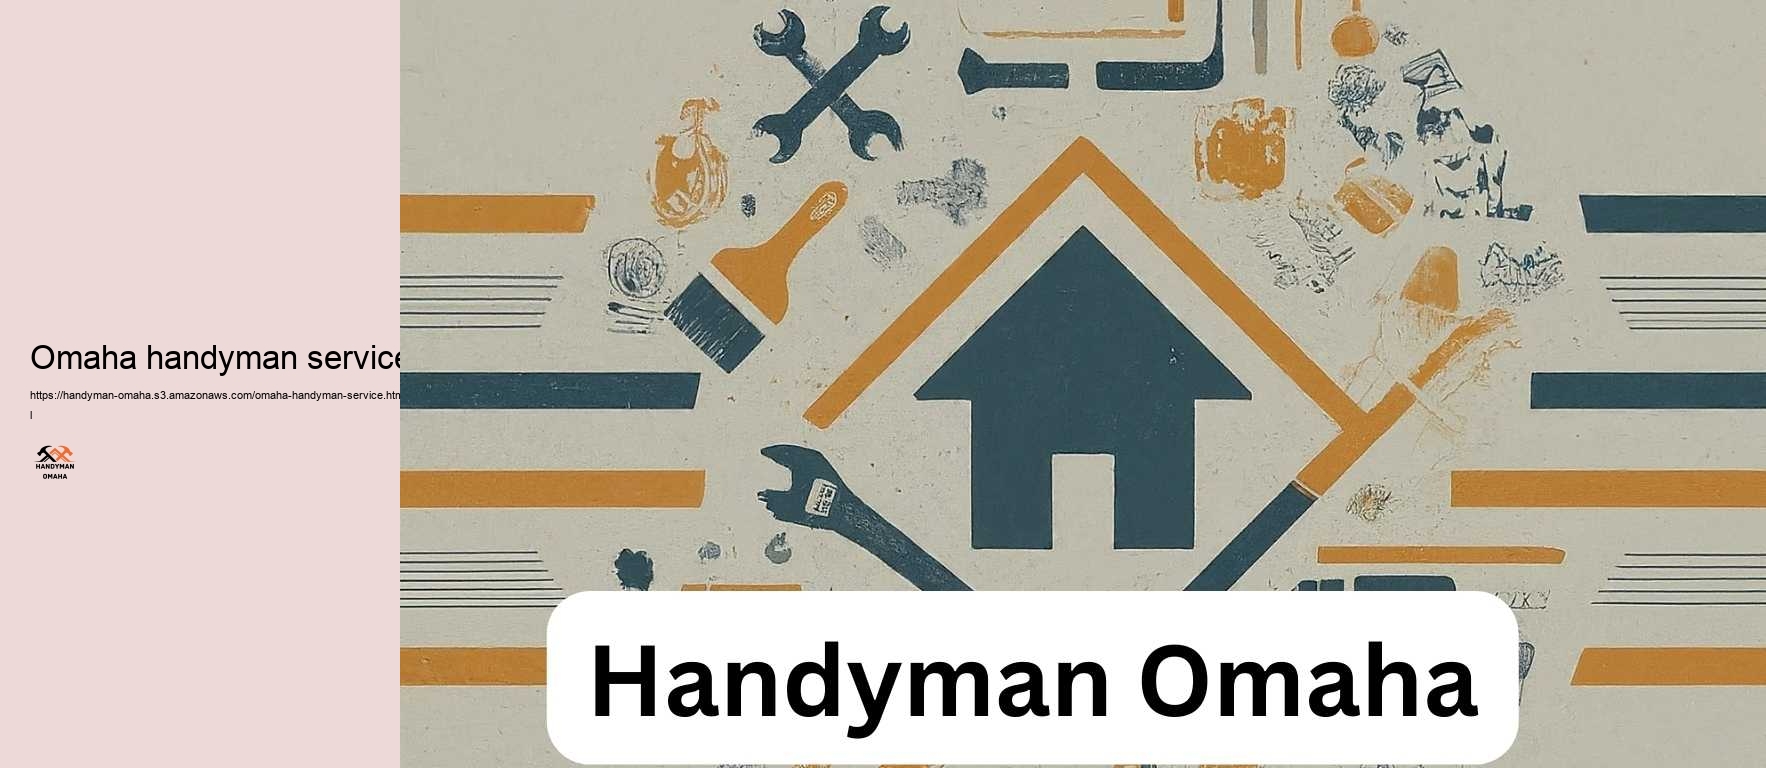 Omaha handyman service